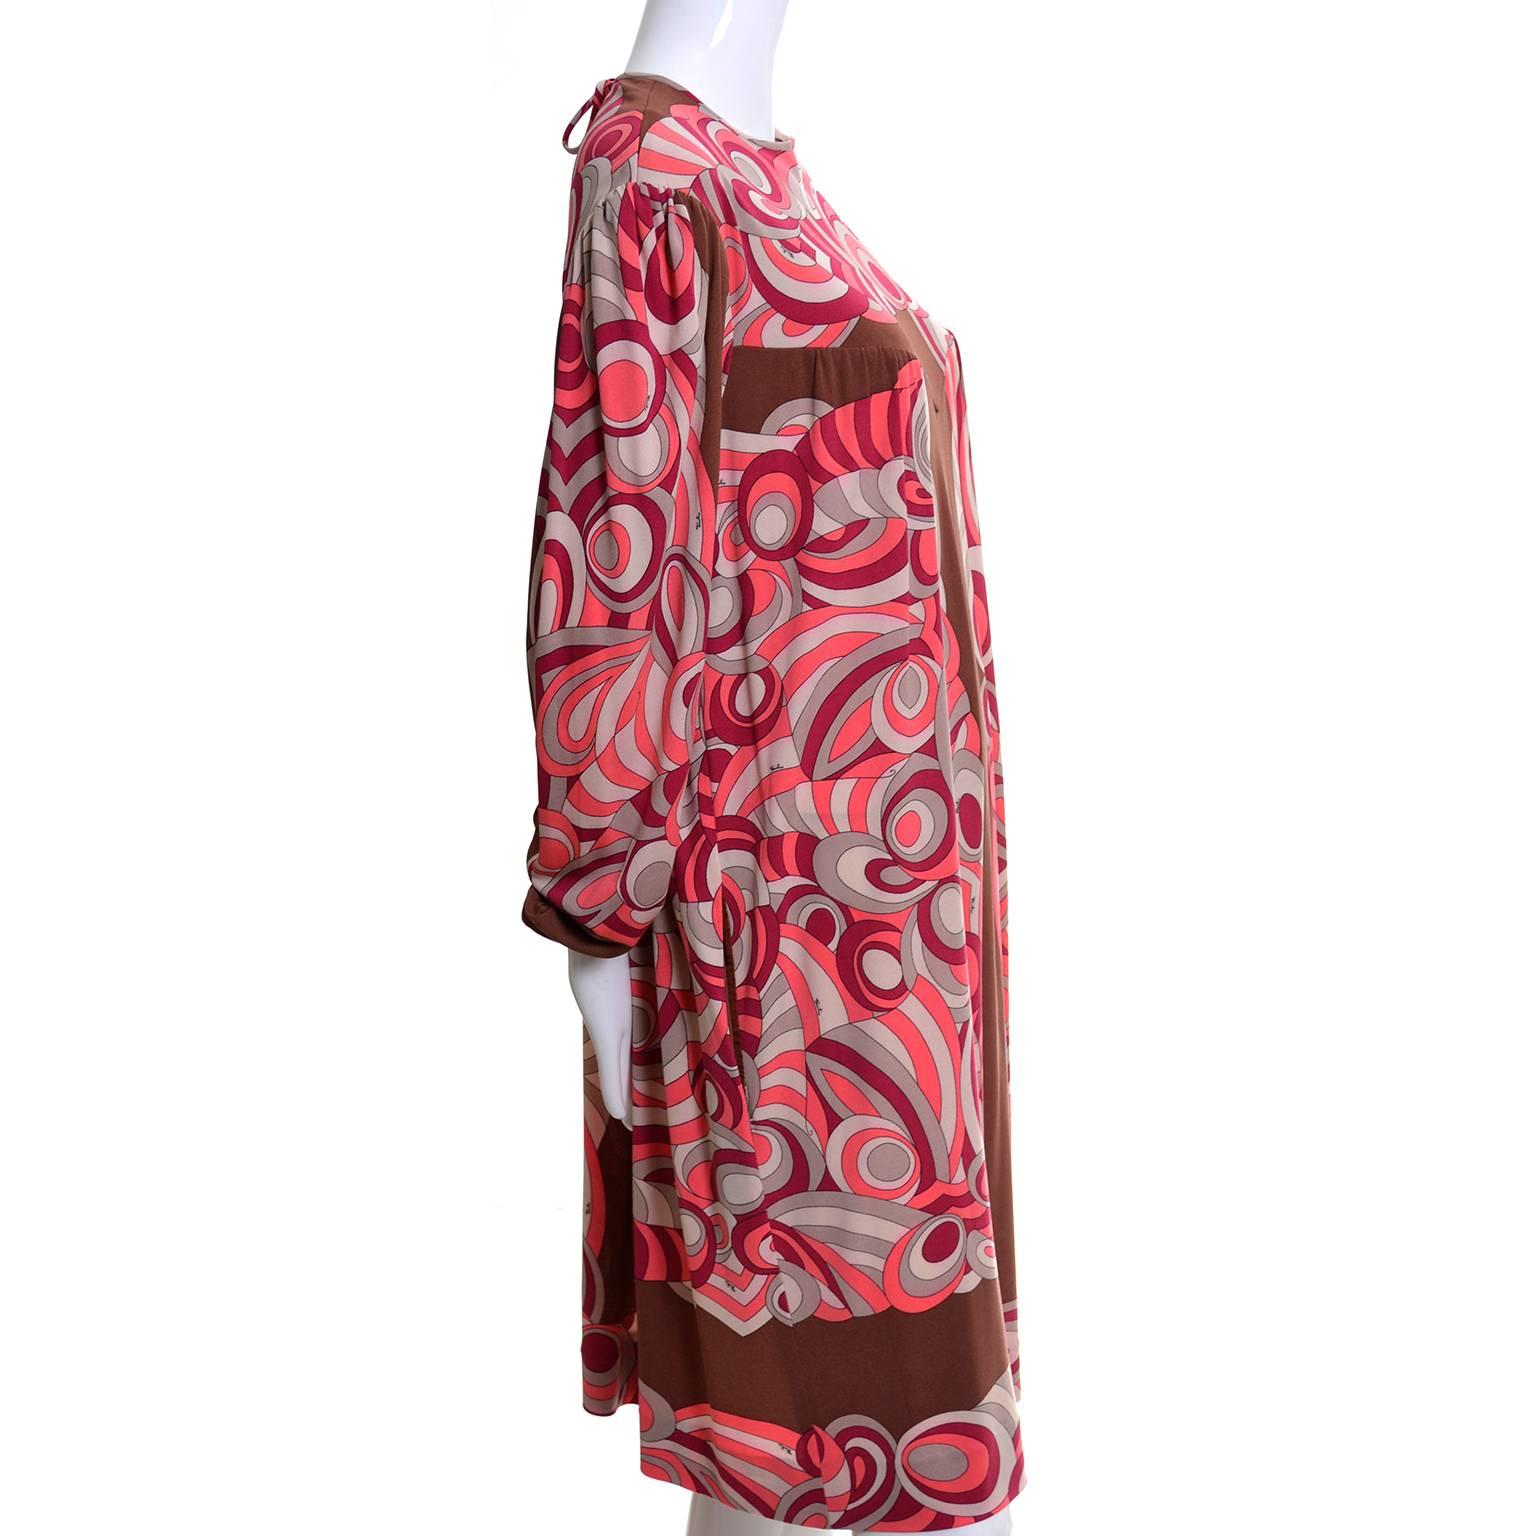 Women's 1970s Emilio Pucci Vintage Dress in Pink & Brown Silk Jersey Size 8/10